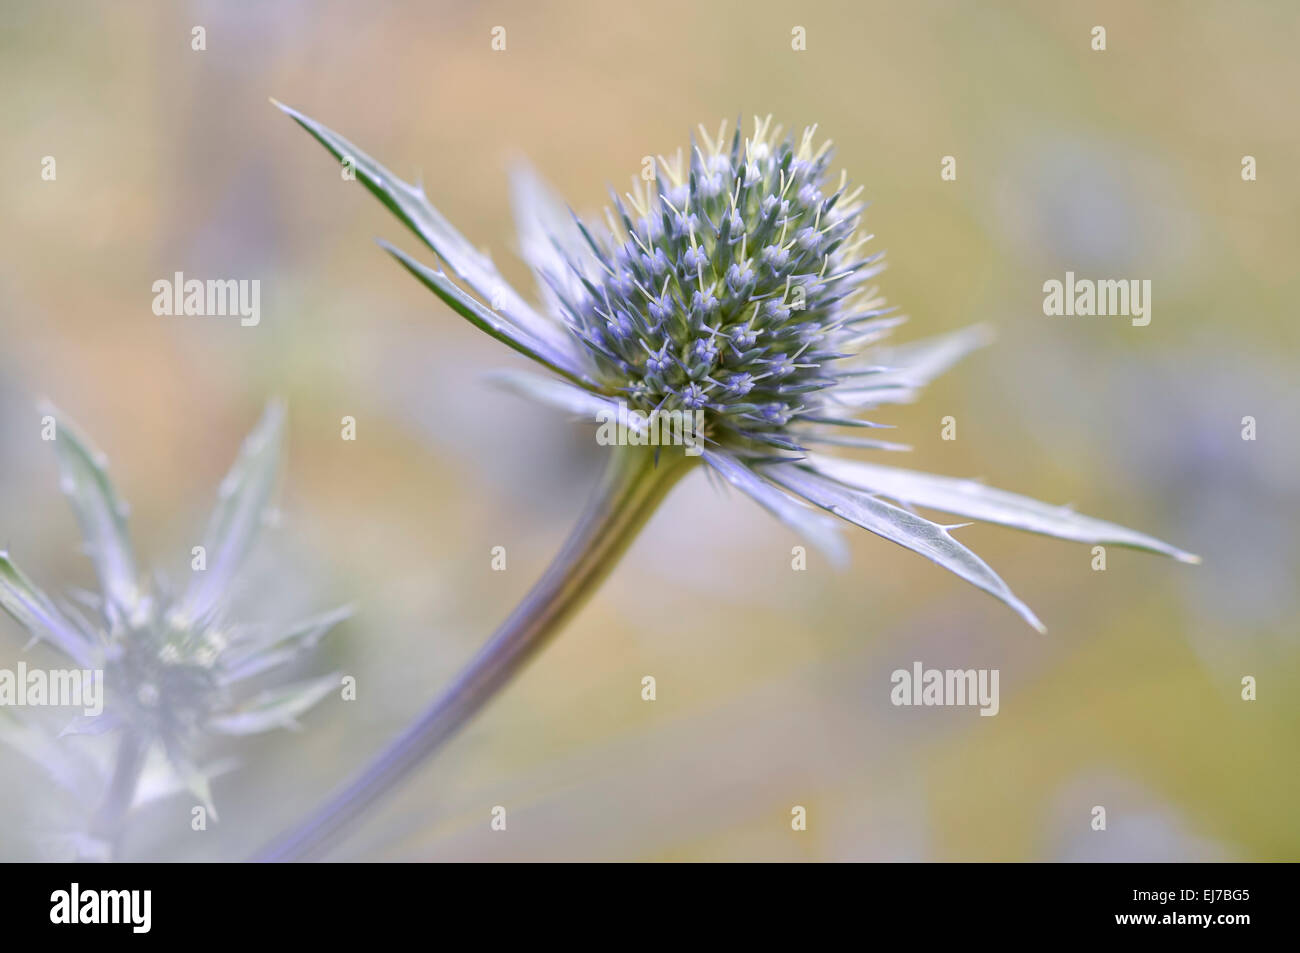 Close up of an Eryngium Planum flower head with a spikey blue ruff. Stock Photo